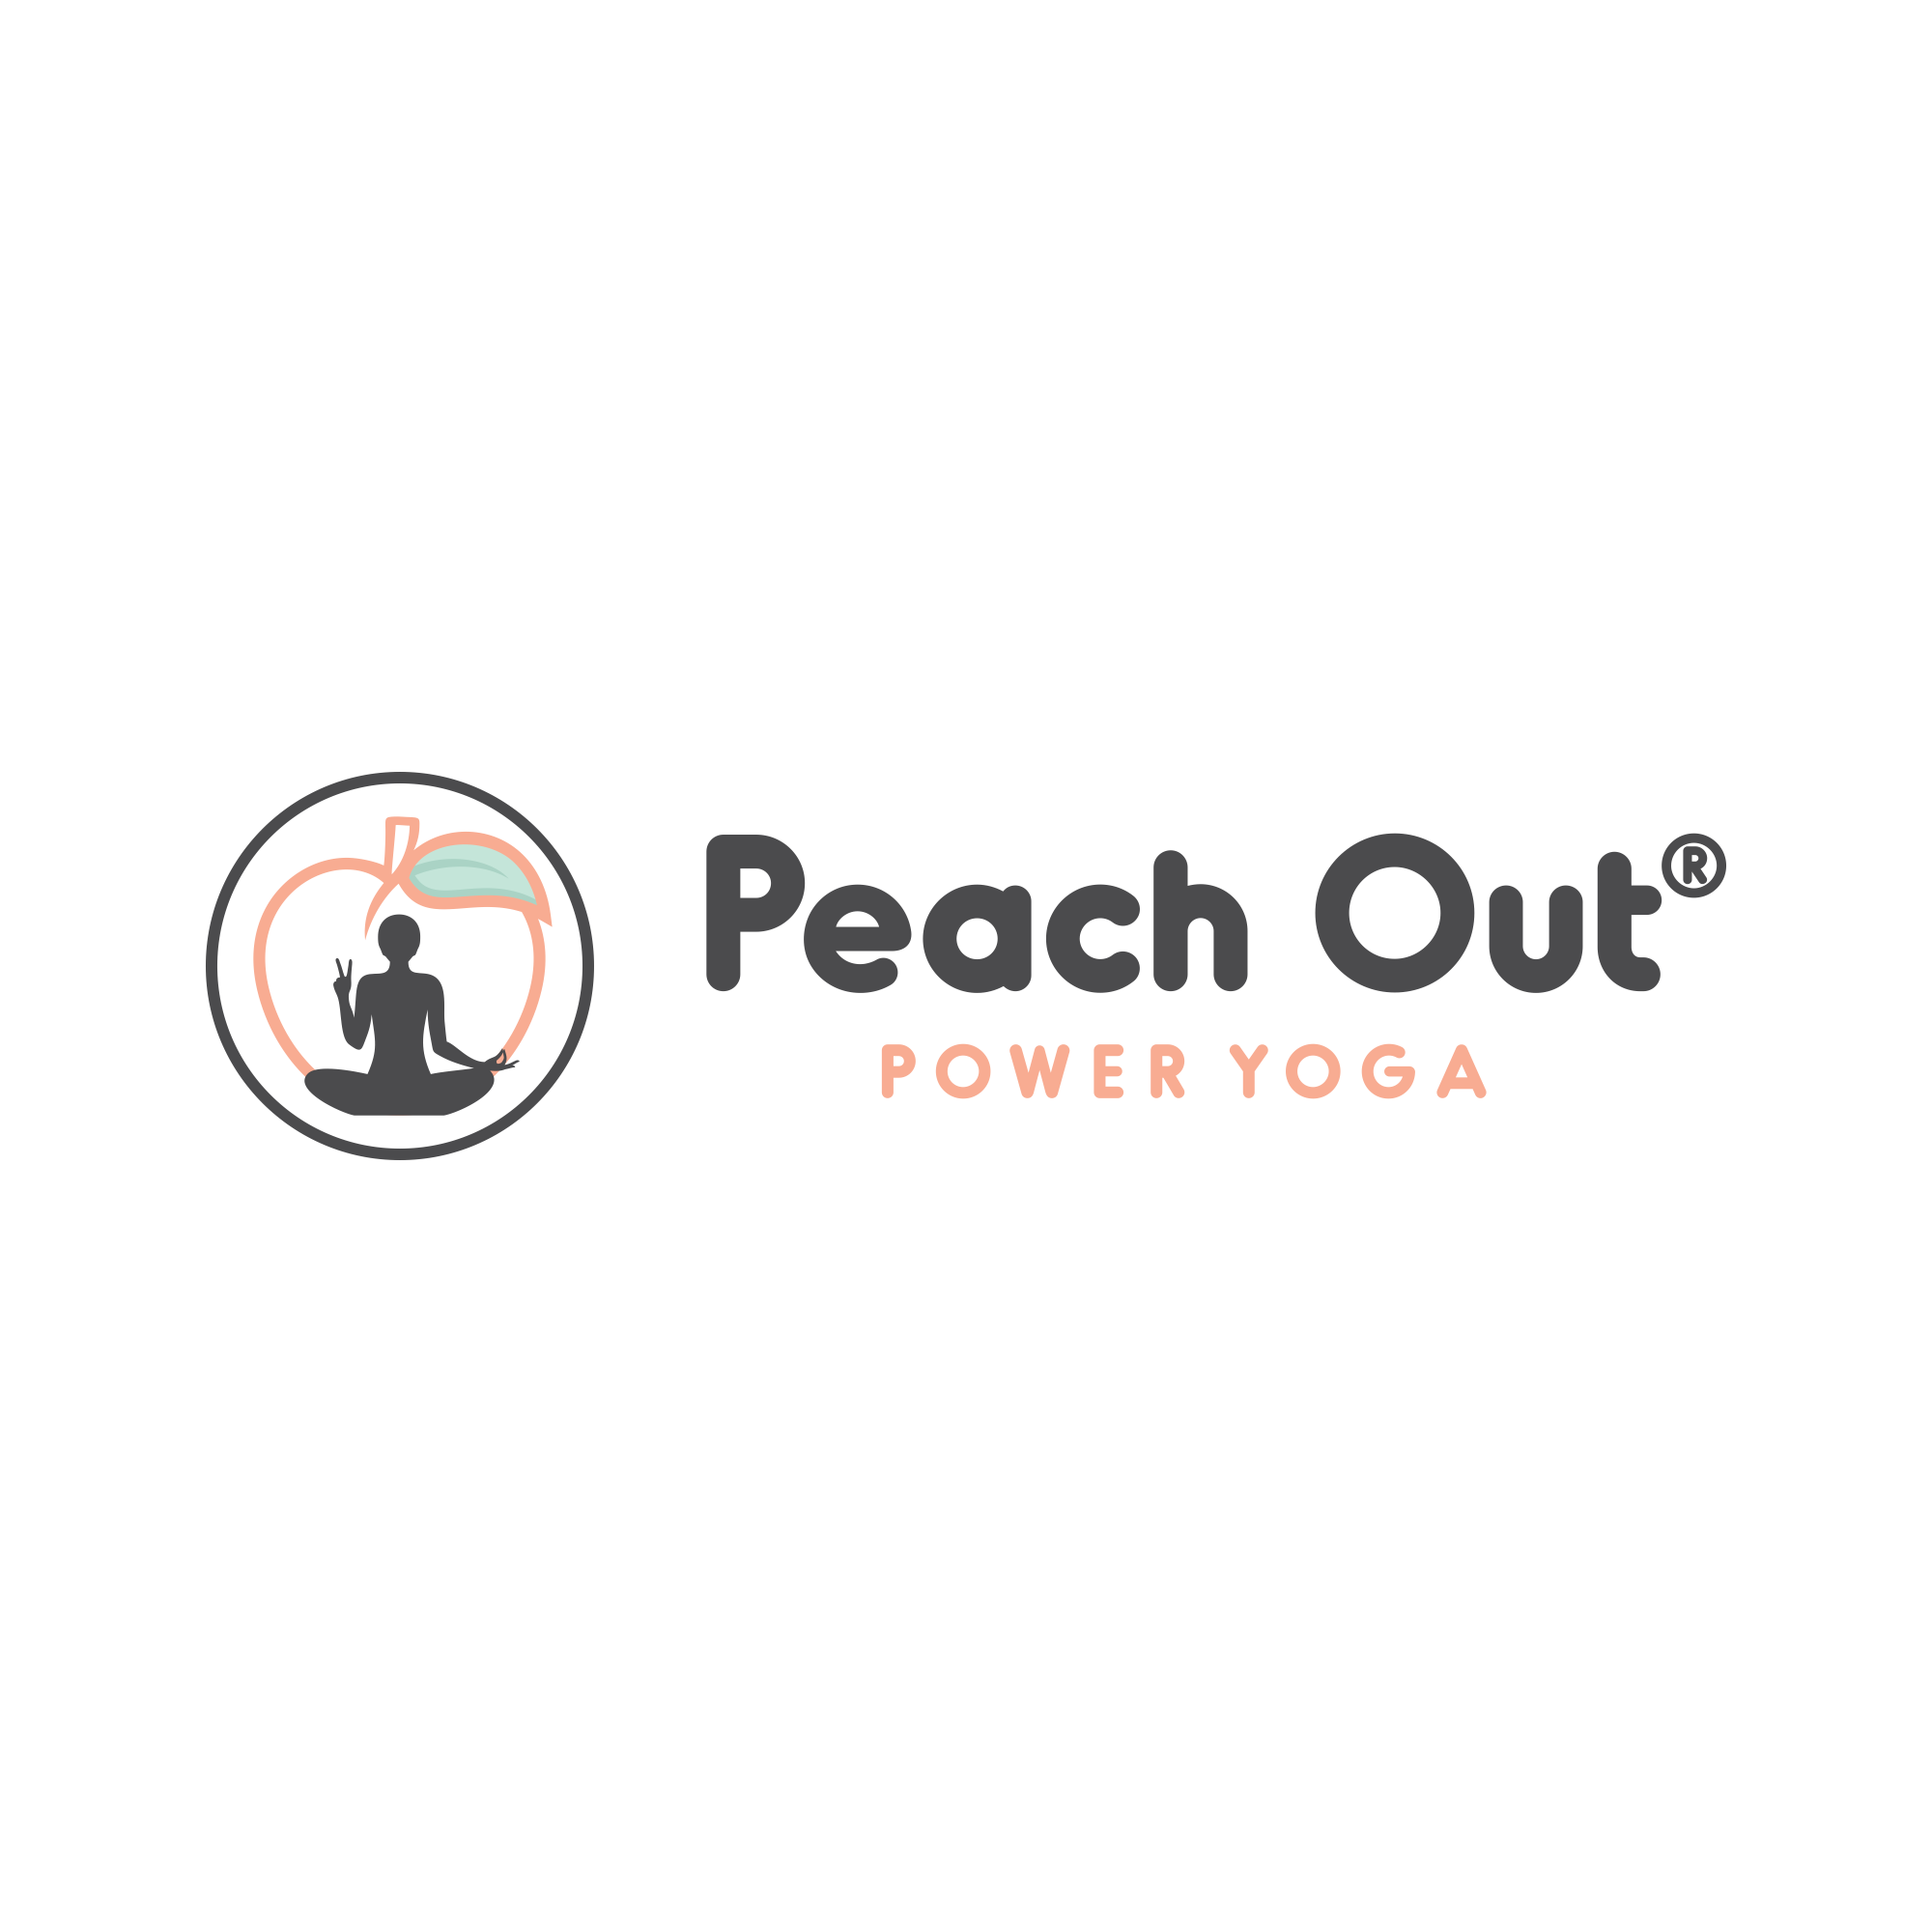 Karen Patton, a Yogapreneur on the Rise Making Waves Through Peach Out Power Yoga